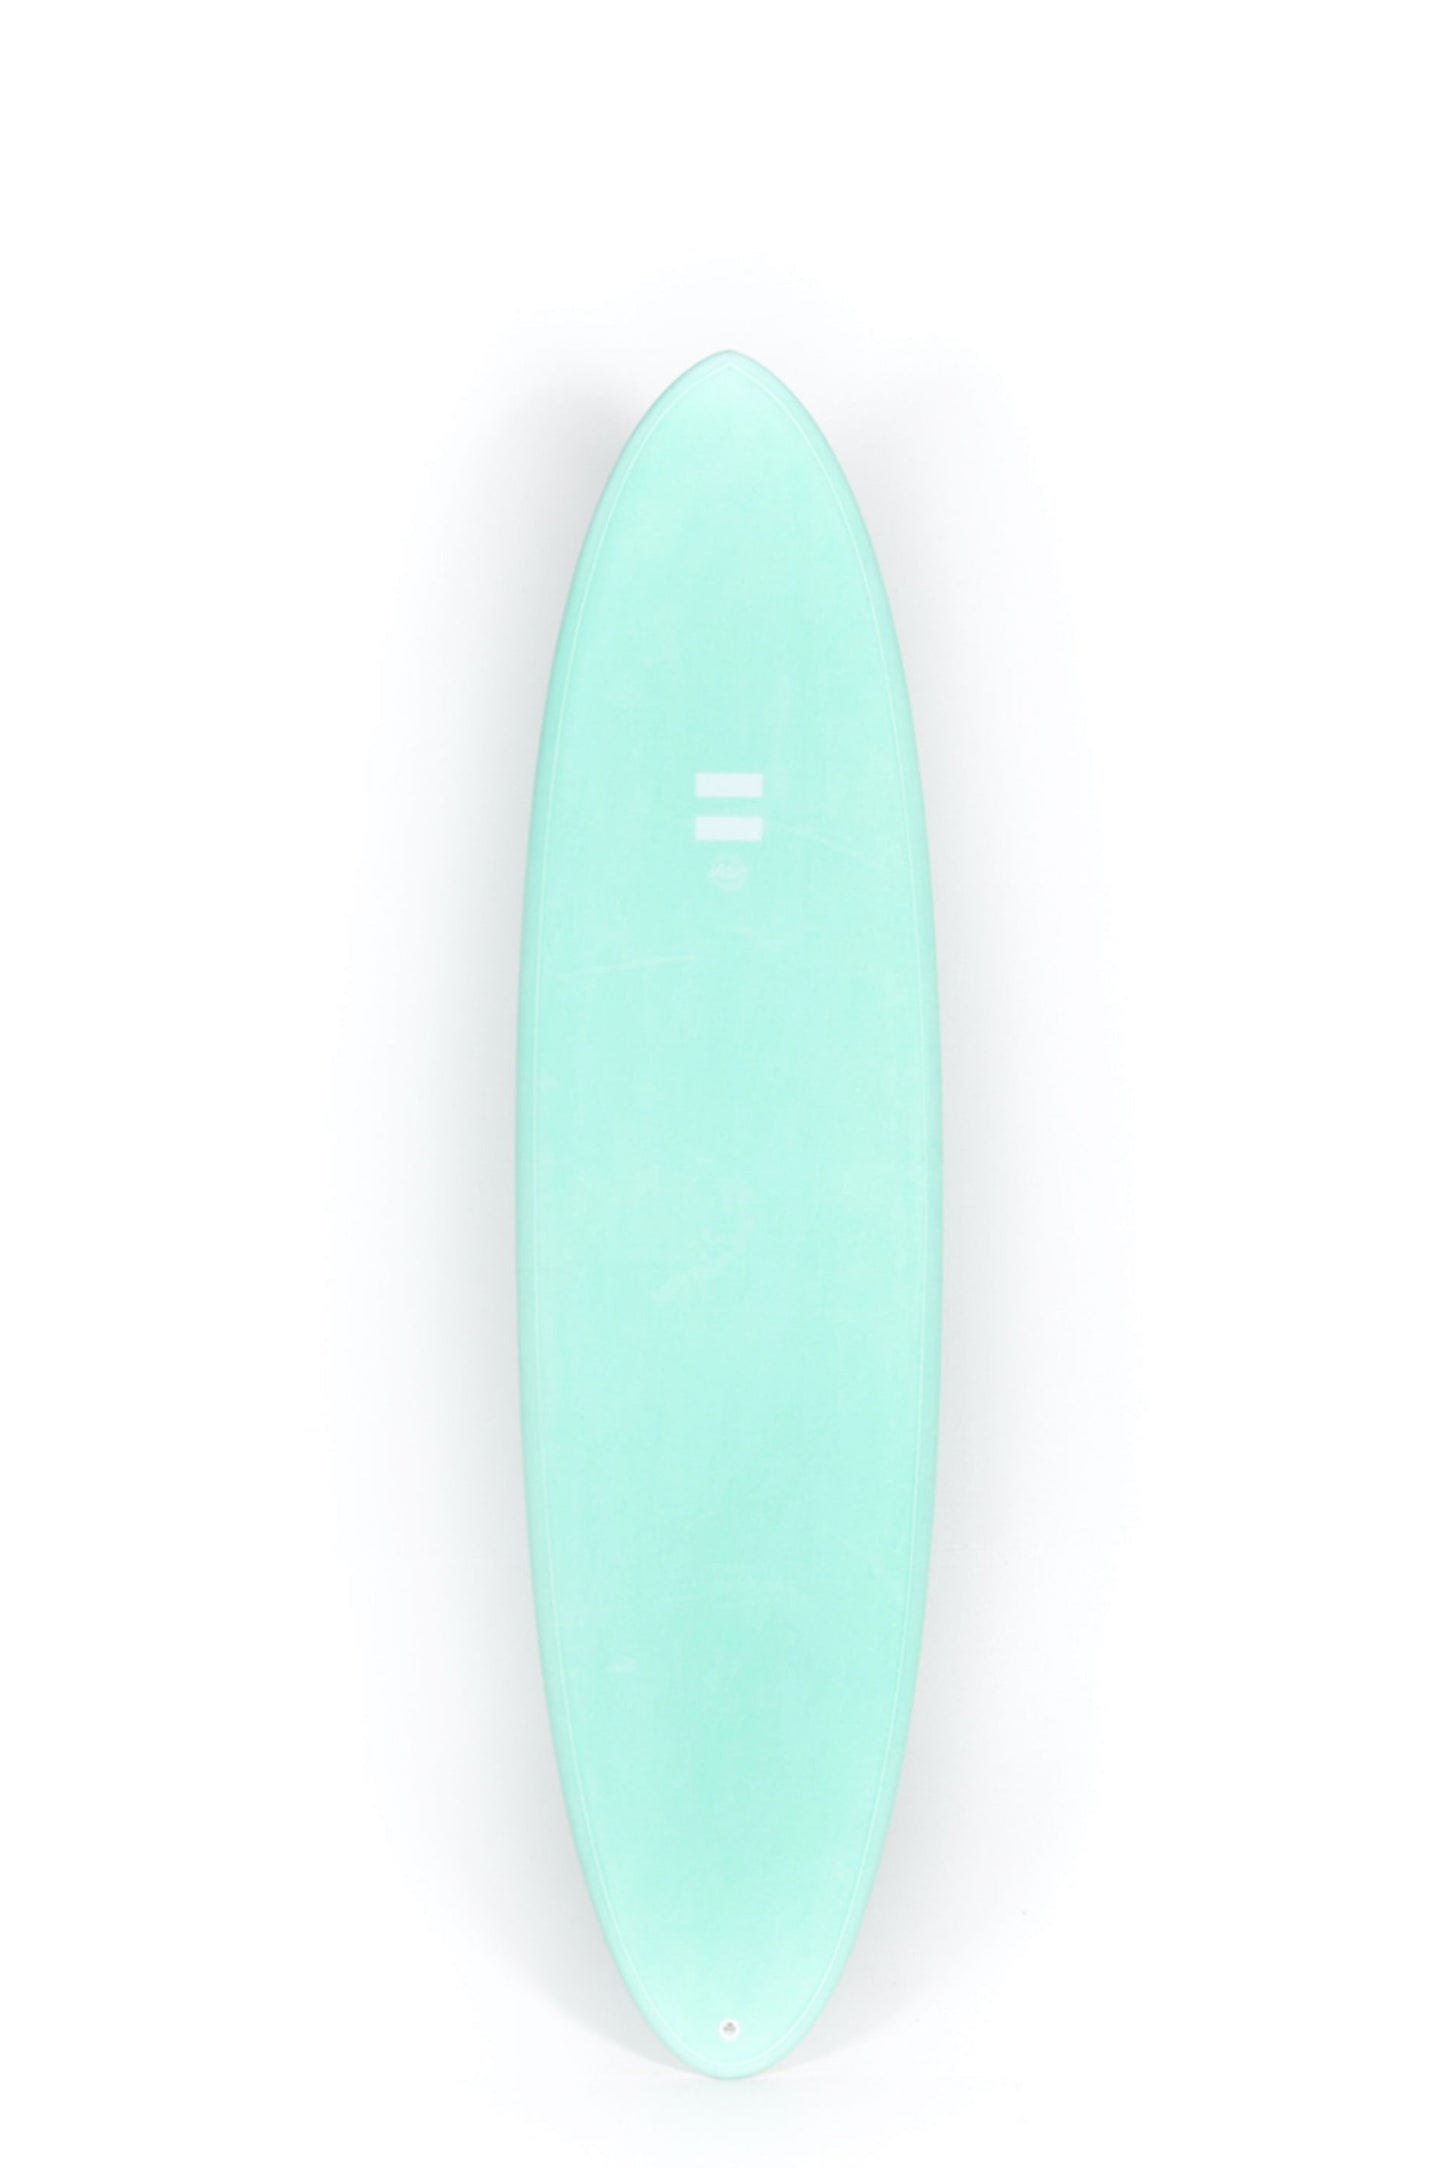     Pukas-Surf-Shop-Indio-Surfboards-The-Egg-Aqua-Mint